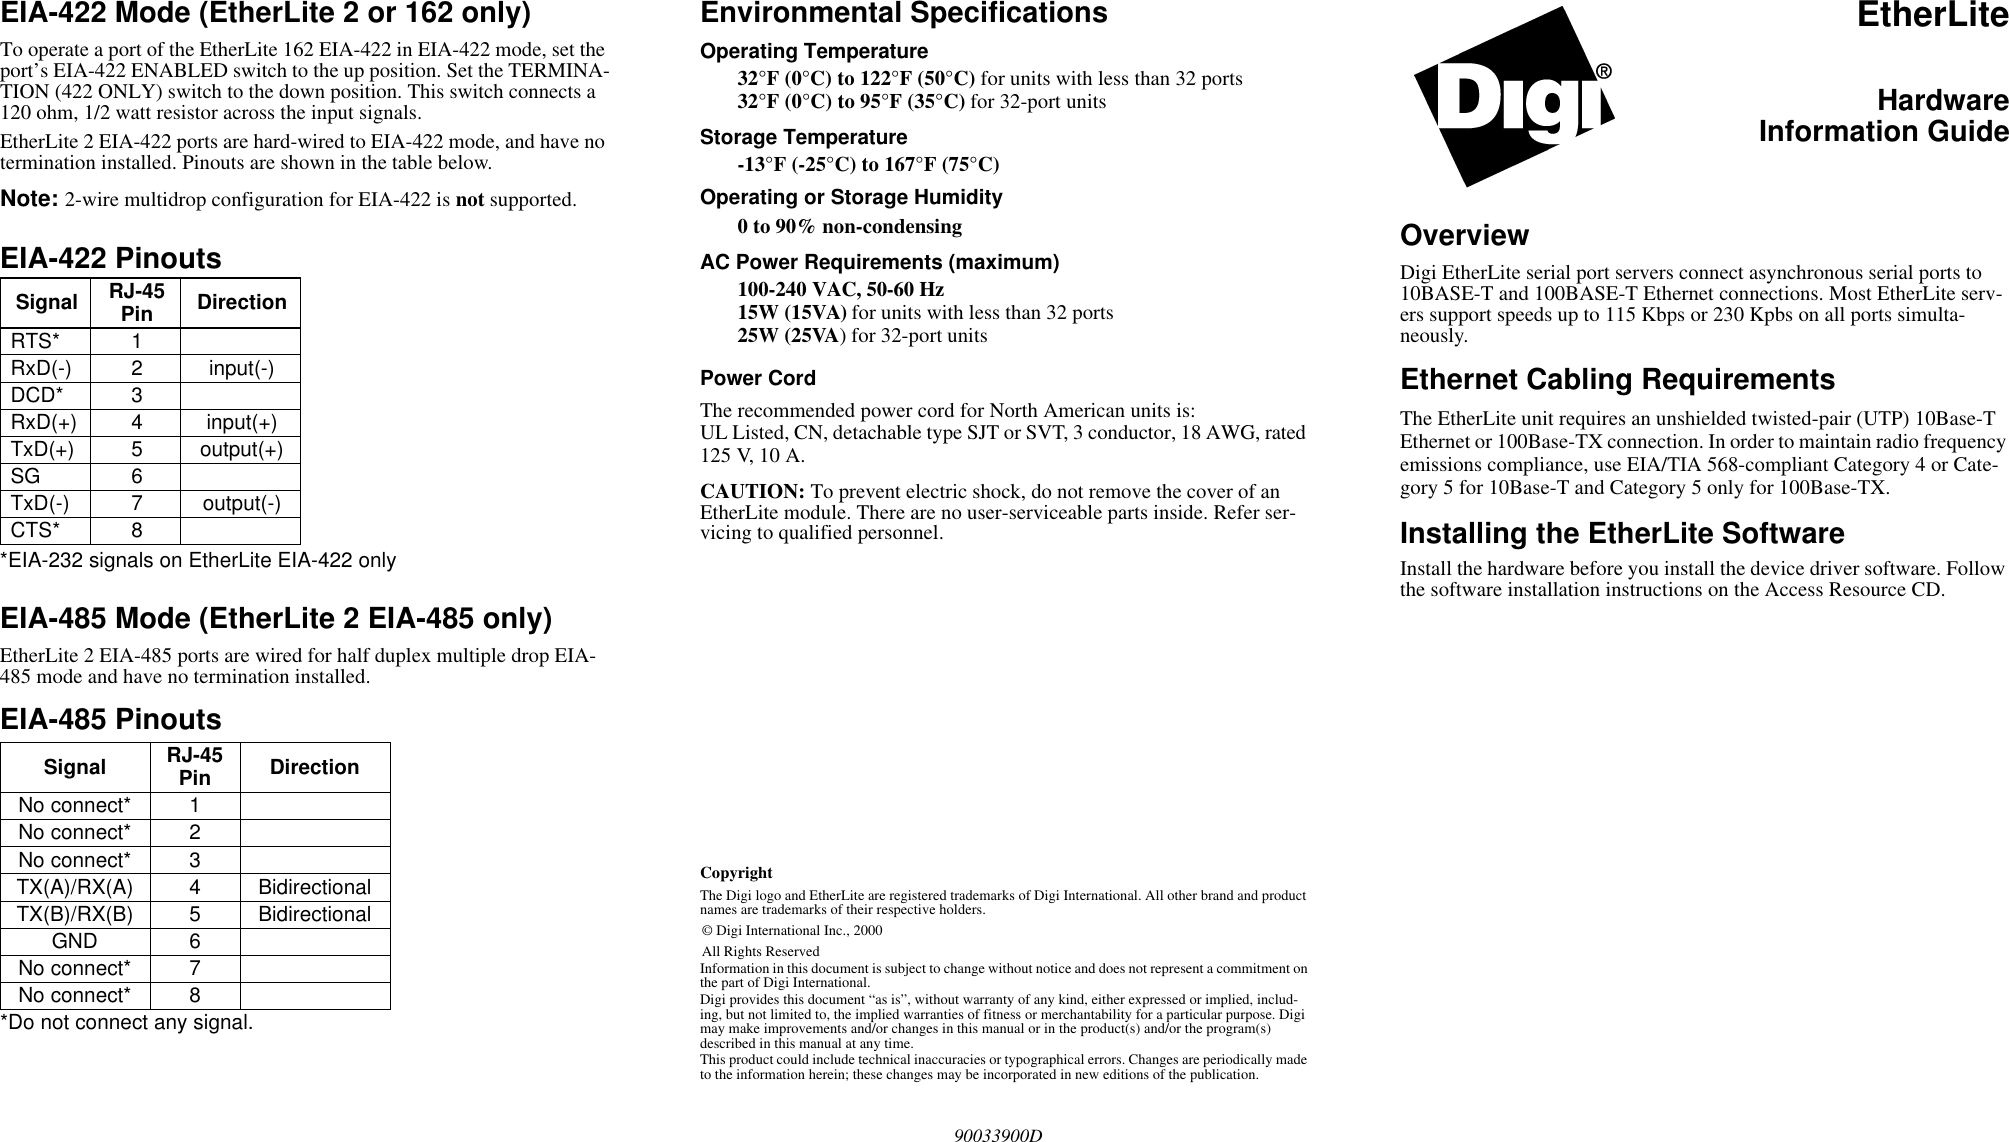 Page 1 of 2 - Digi Digi-Eia-422-Users-Manual- 90033900D  Digi-eia-422-users-manual